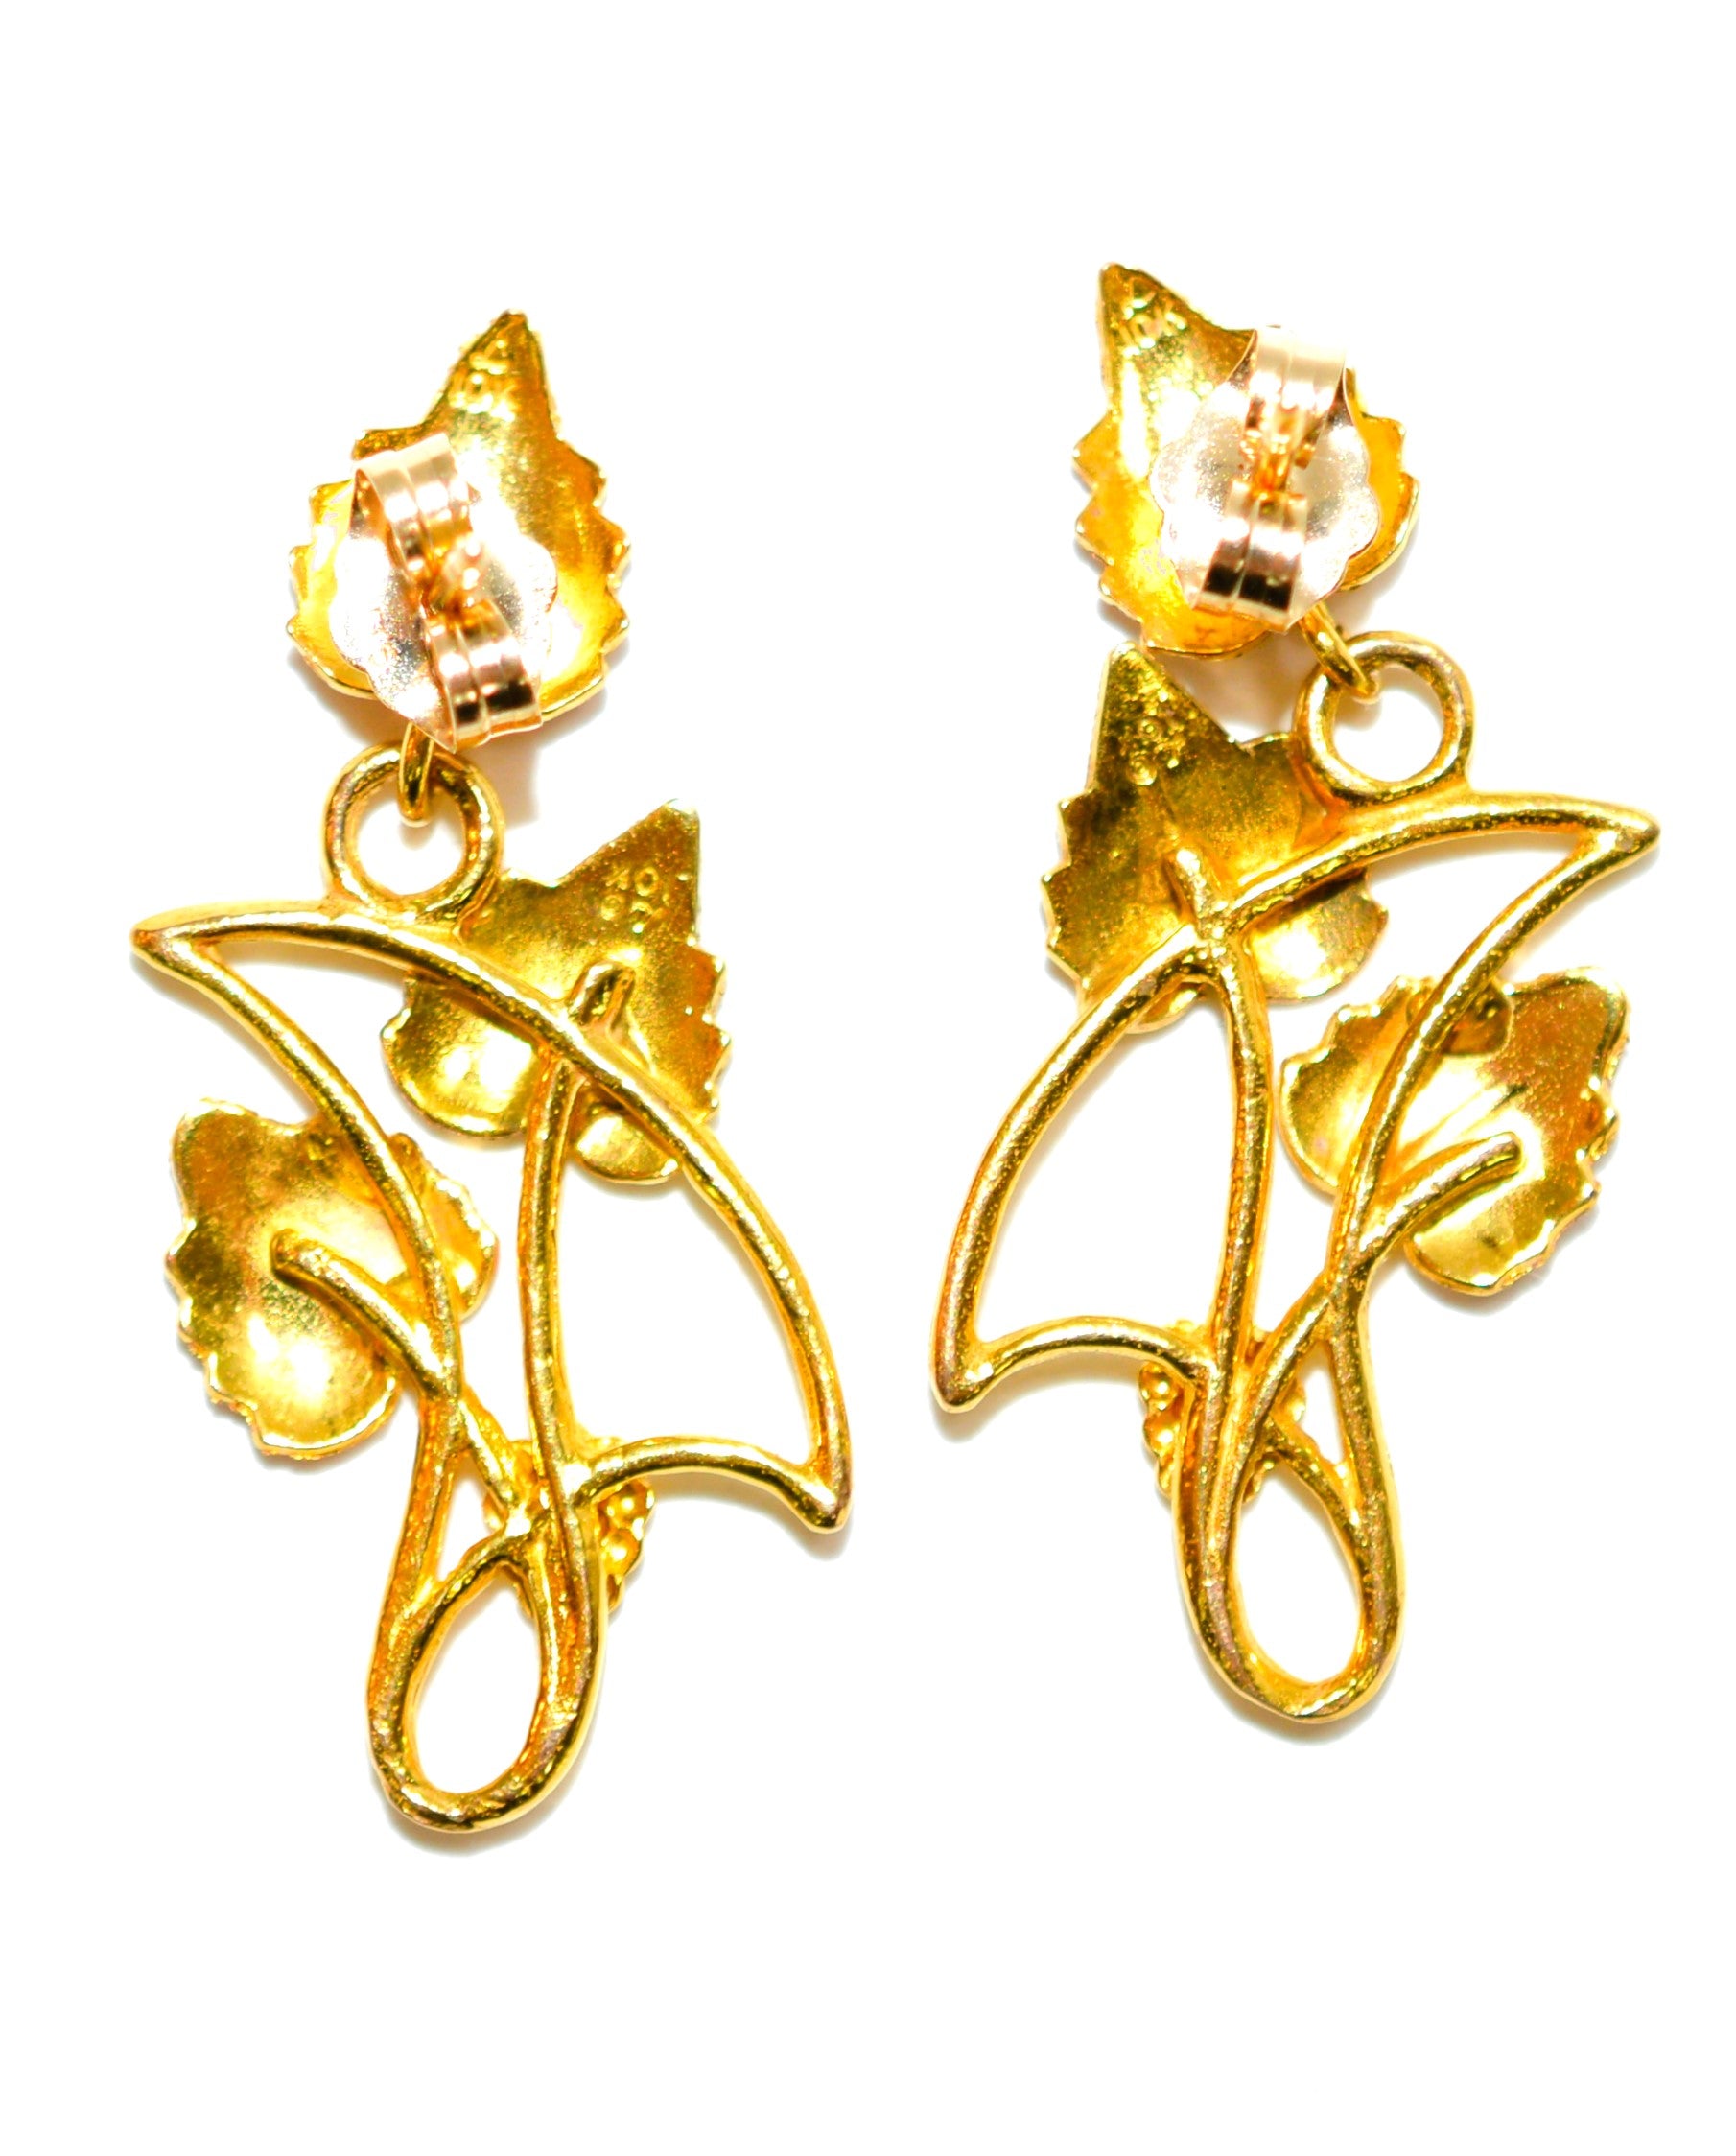 Black Hills Gold Earrings 10K Solid Gold Leaf Earrings Tri-Color Gold Earrings South Dakota Dangle Drop Earrings American USA Estate Vintage